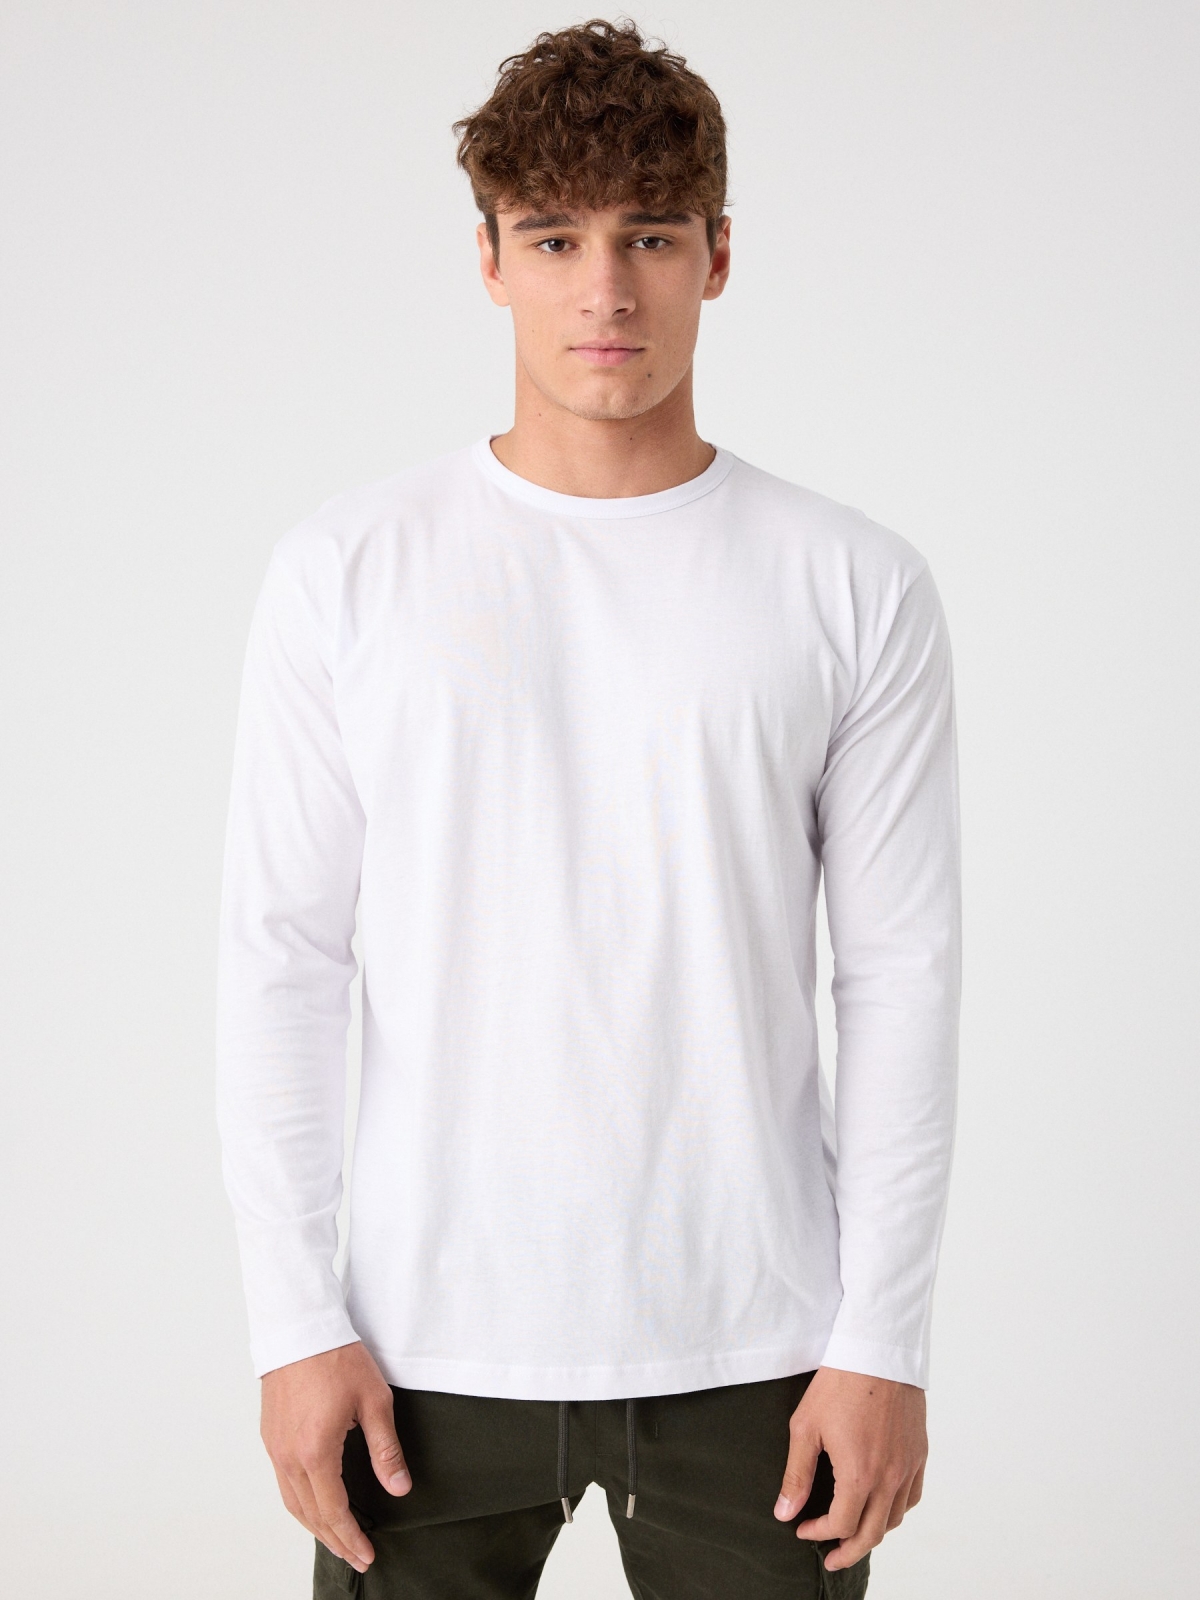 Camiseta básica manga larga blanco vista media frontal